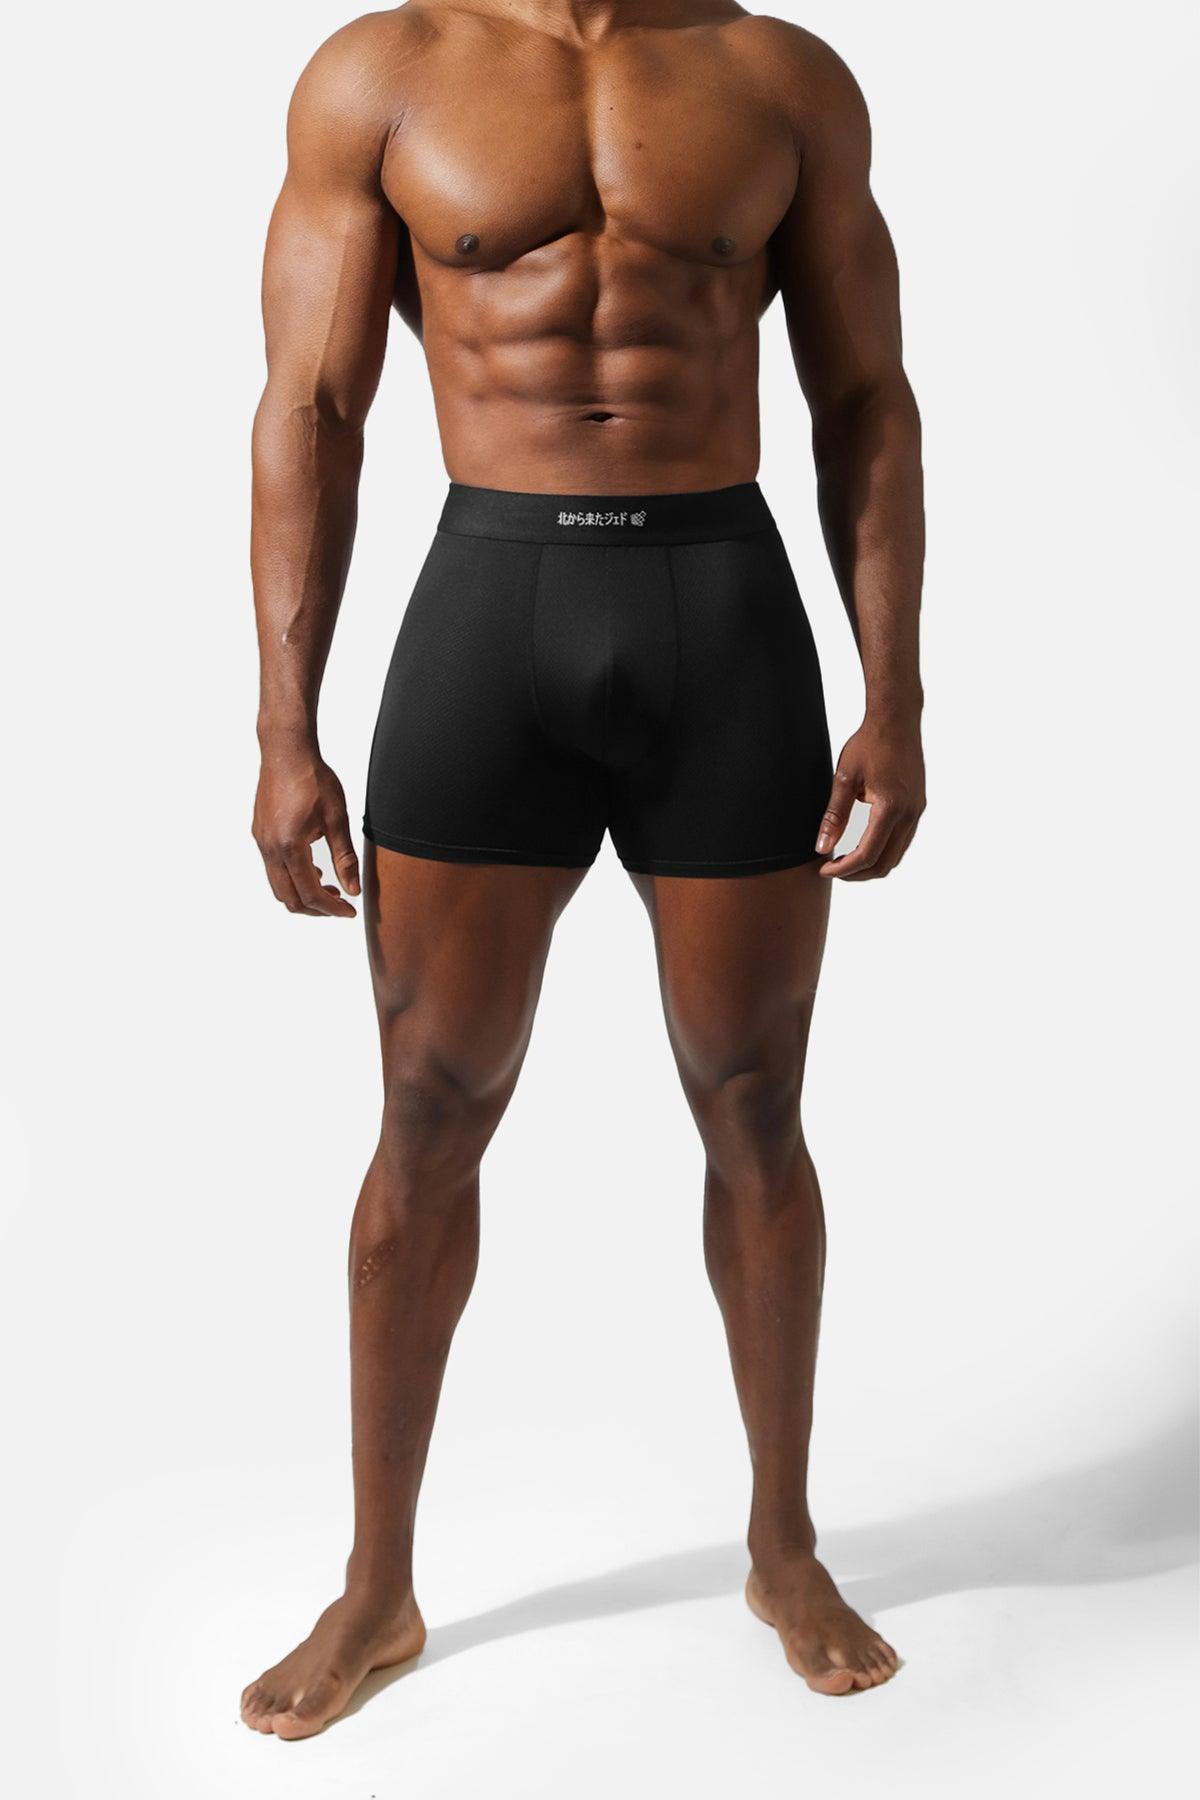 Men's Workout Mesh Briefs 2 Pack - Black & Navy